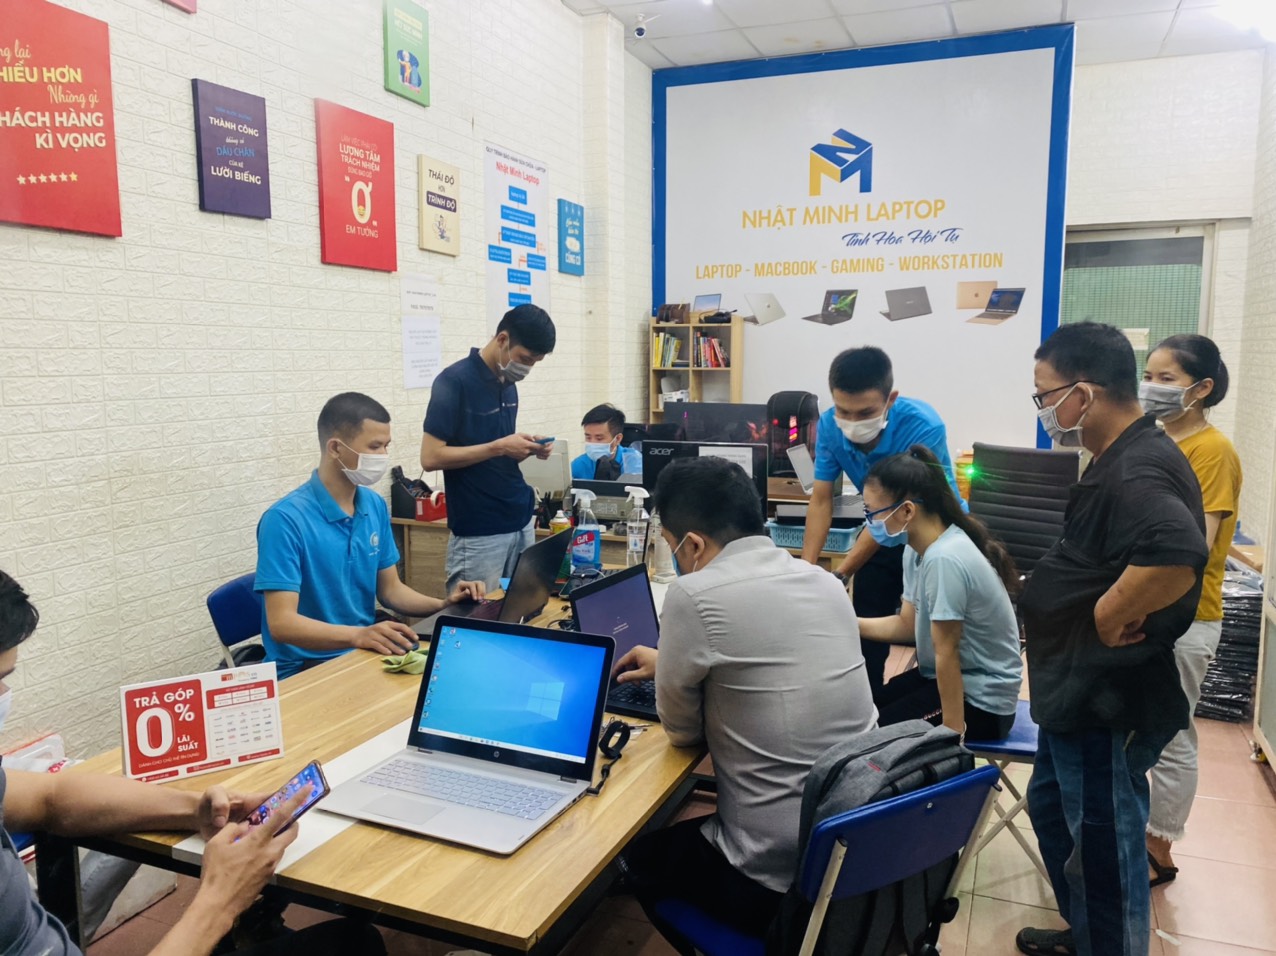 Nhật Minh Laptop Chuyên Laptop Cũ Giá Rẻ